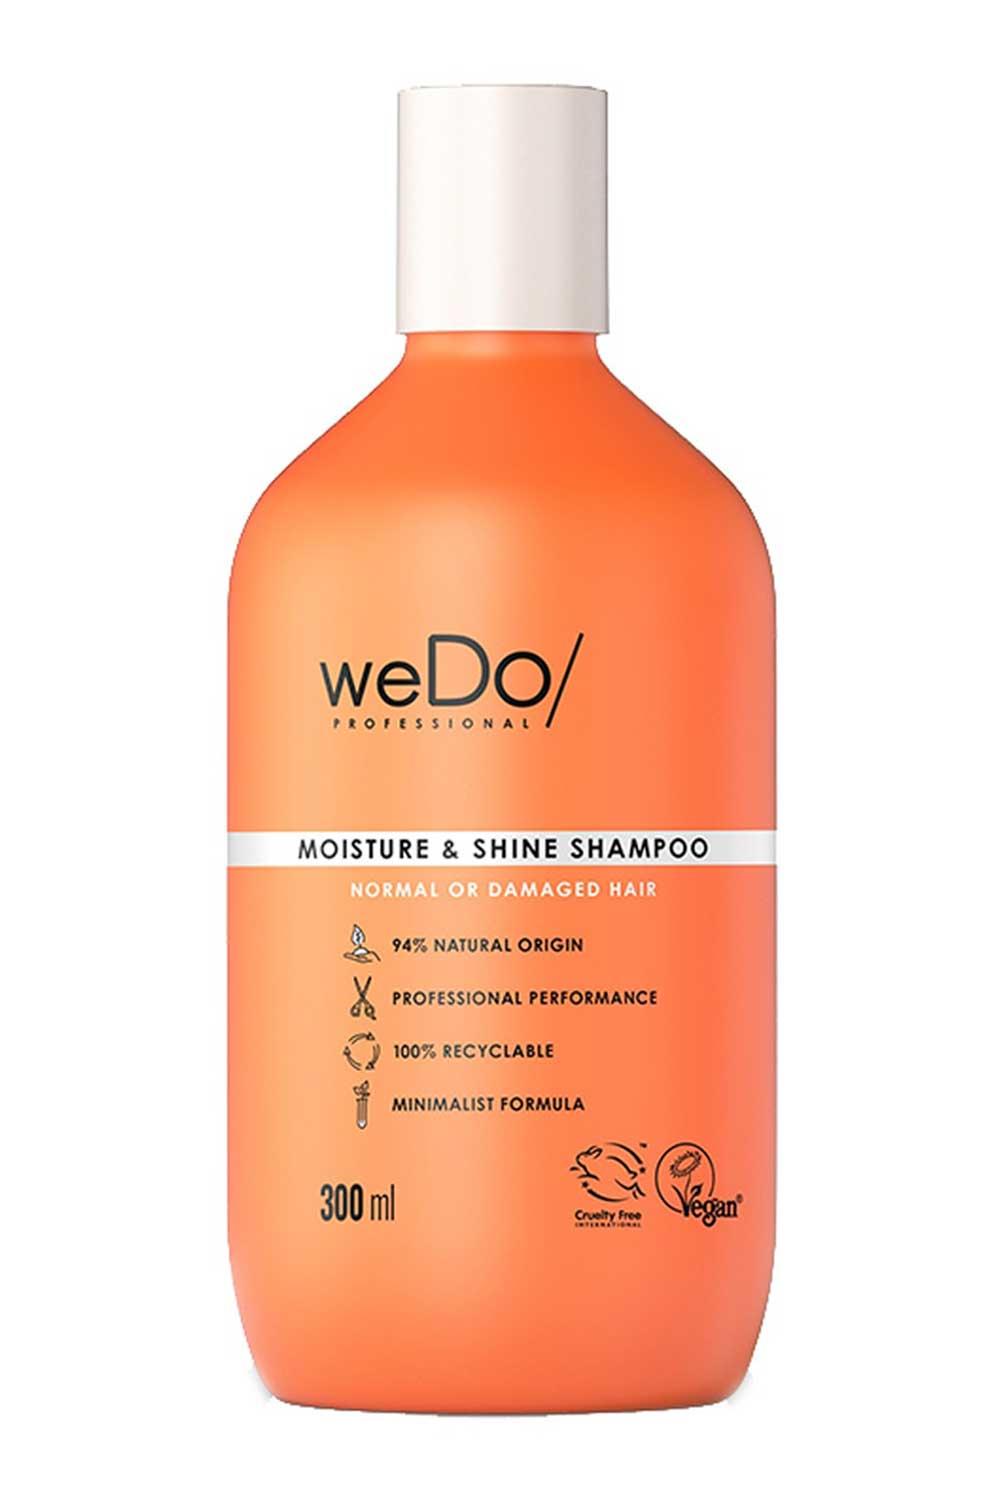 Champú Moisture & Shine Shampoo, Wedo/ Professional